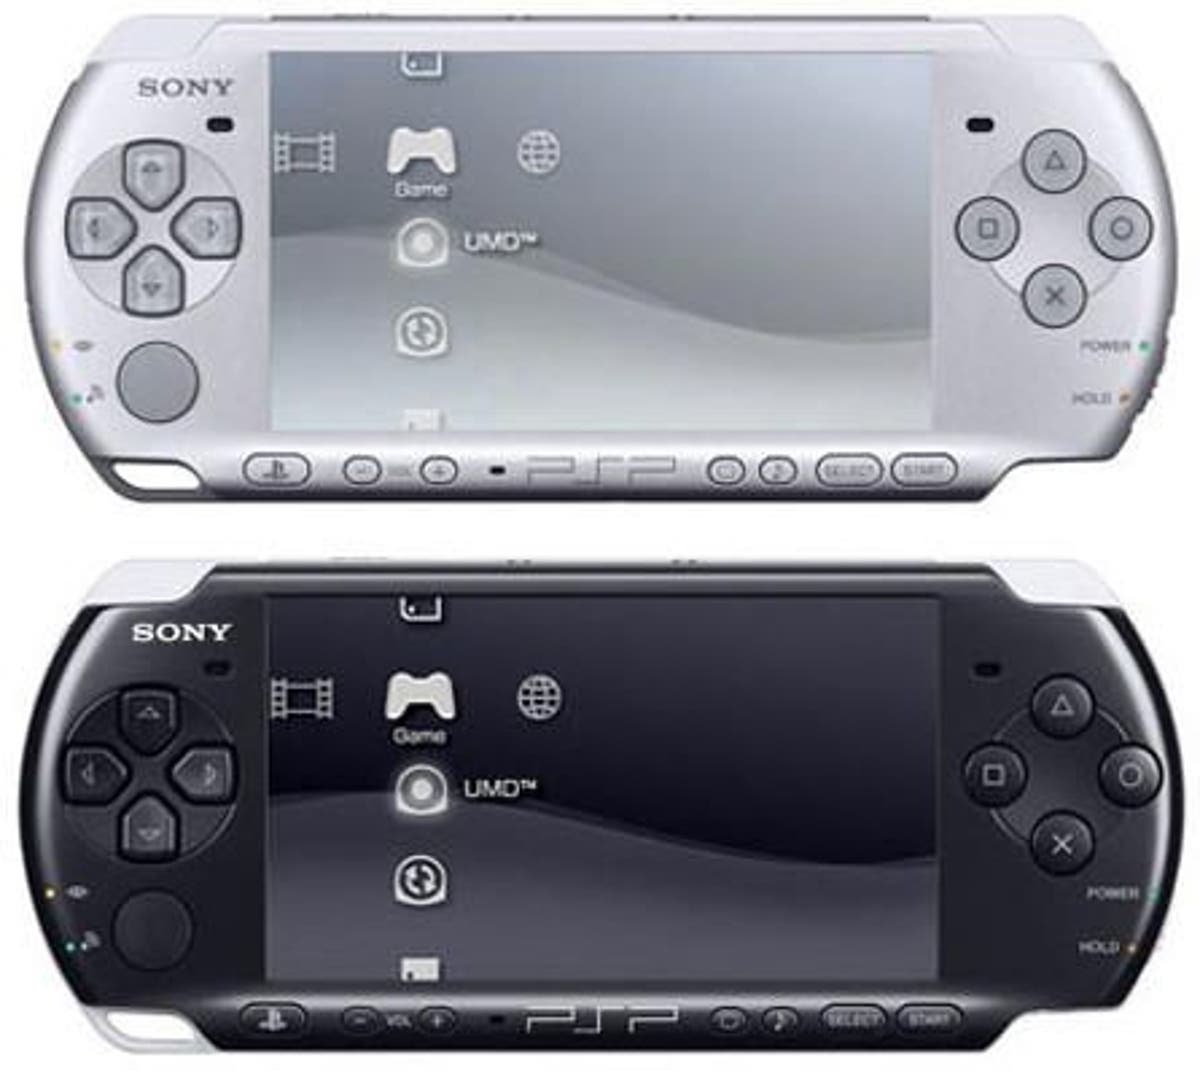 atractivo repentinamente consenso Sony PSP-3000 baja hoy de precio a 130 euros